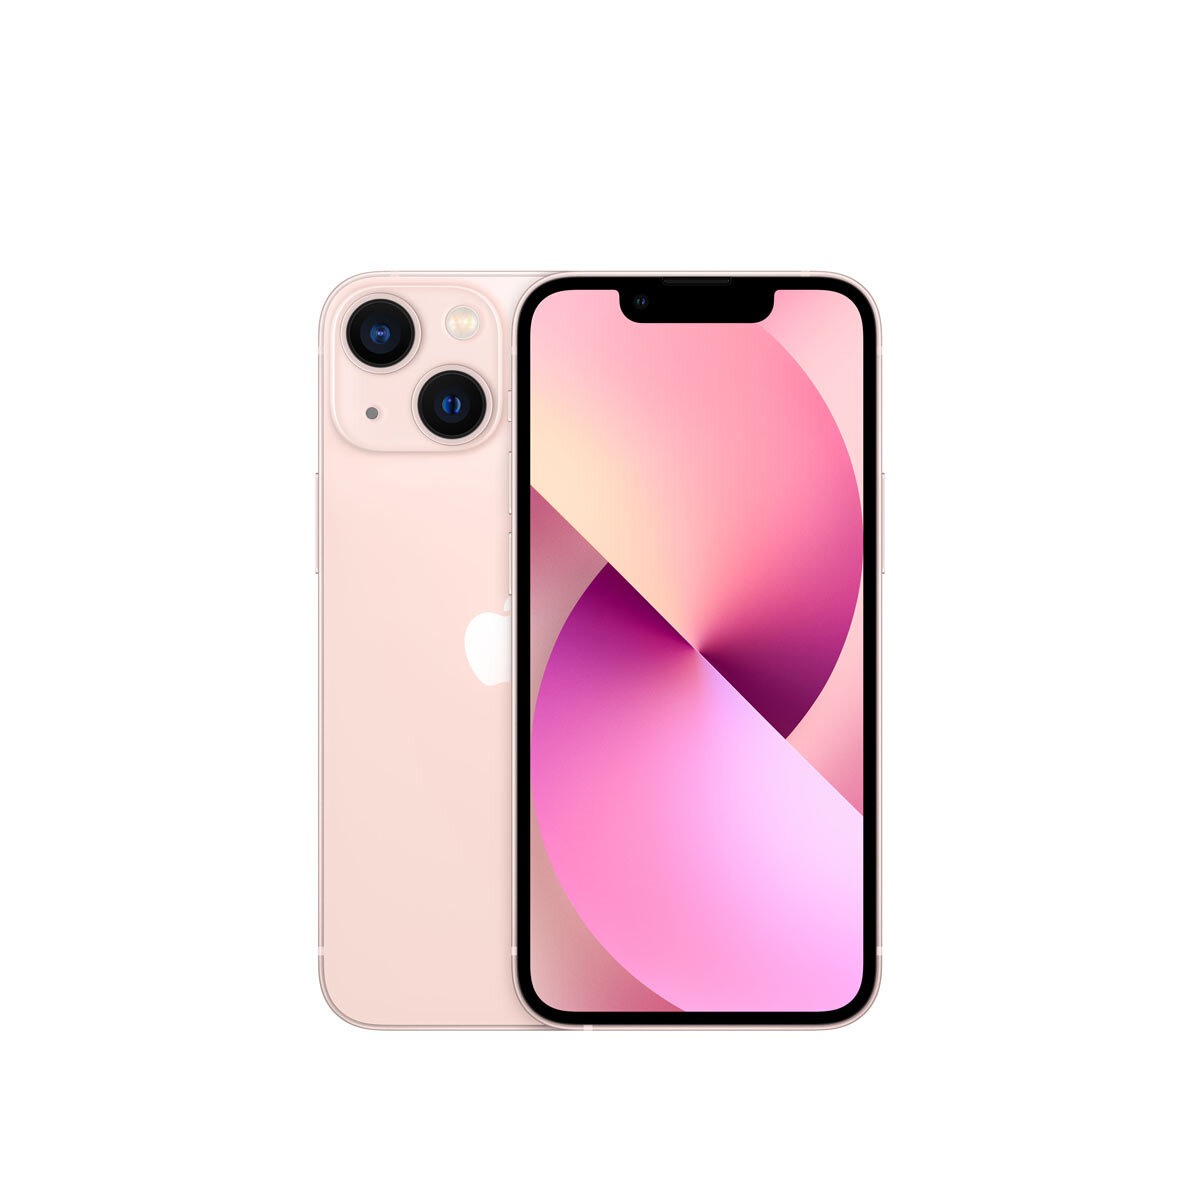 Buy Apple iPhone 13 mini 256GB Sim Free Mobile Phone in Pink, MLK73B/A at costco.co.uk